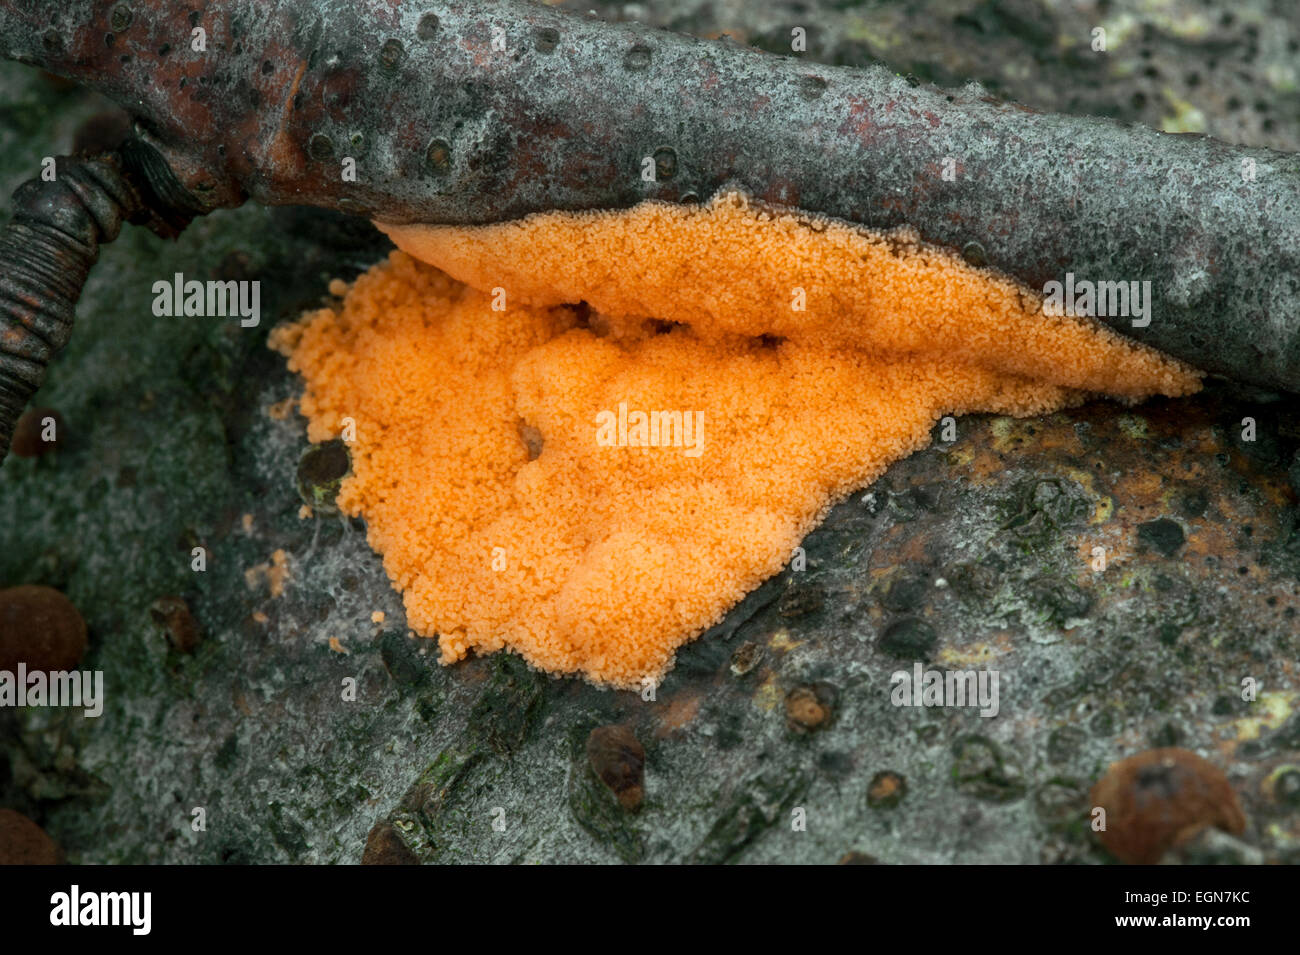 The orange slime mold Dictydiaethalium plumbeum growing on branch Stock Photo